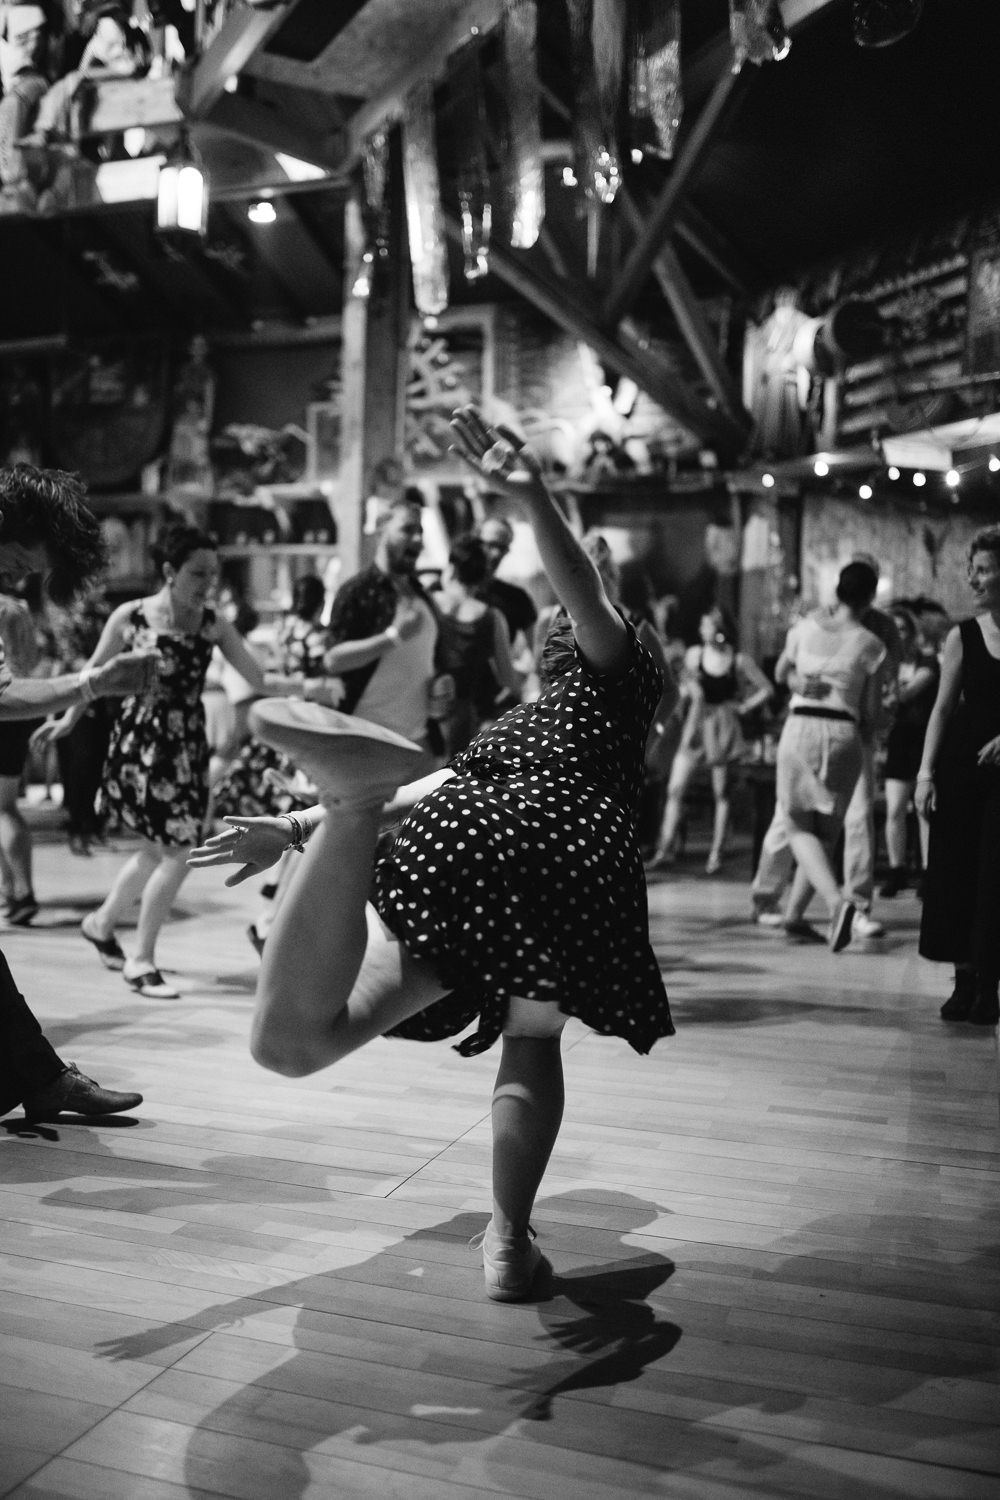  La Folie Swing 2019 - http://www.swing-makers.com/ Credit Photo: www.fb.me/photosForDancersOnly / www.ebobrie.com/la-folie-swing-2019 